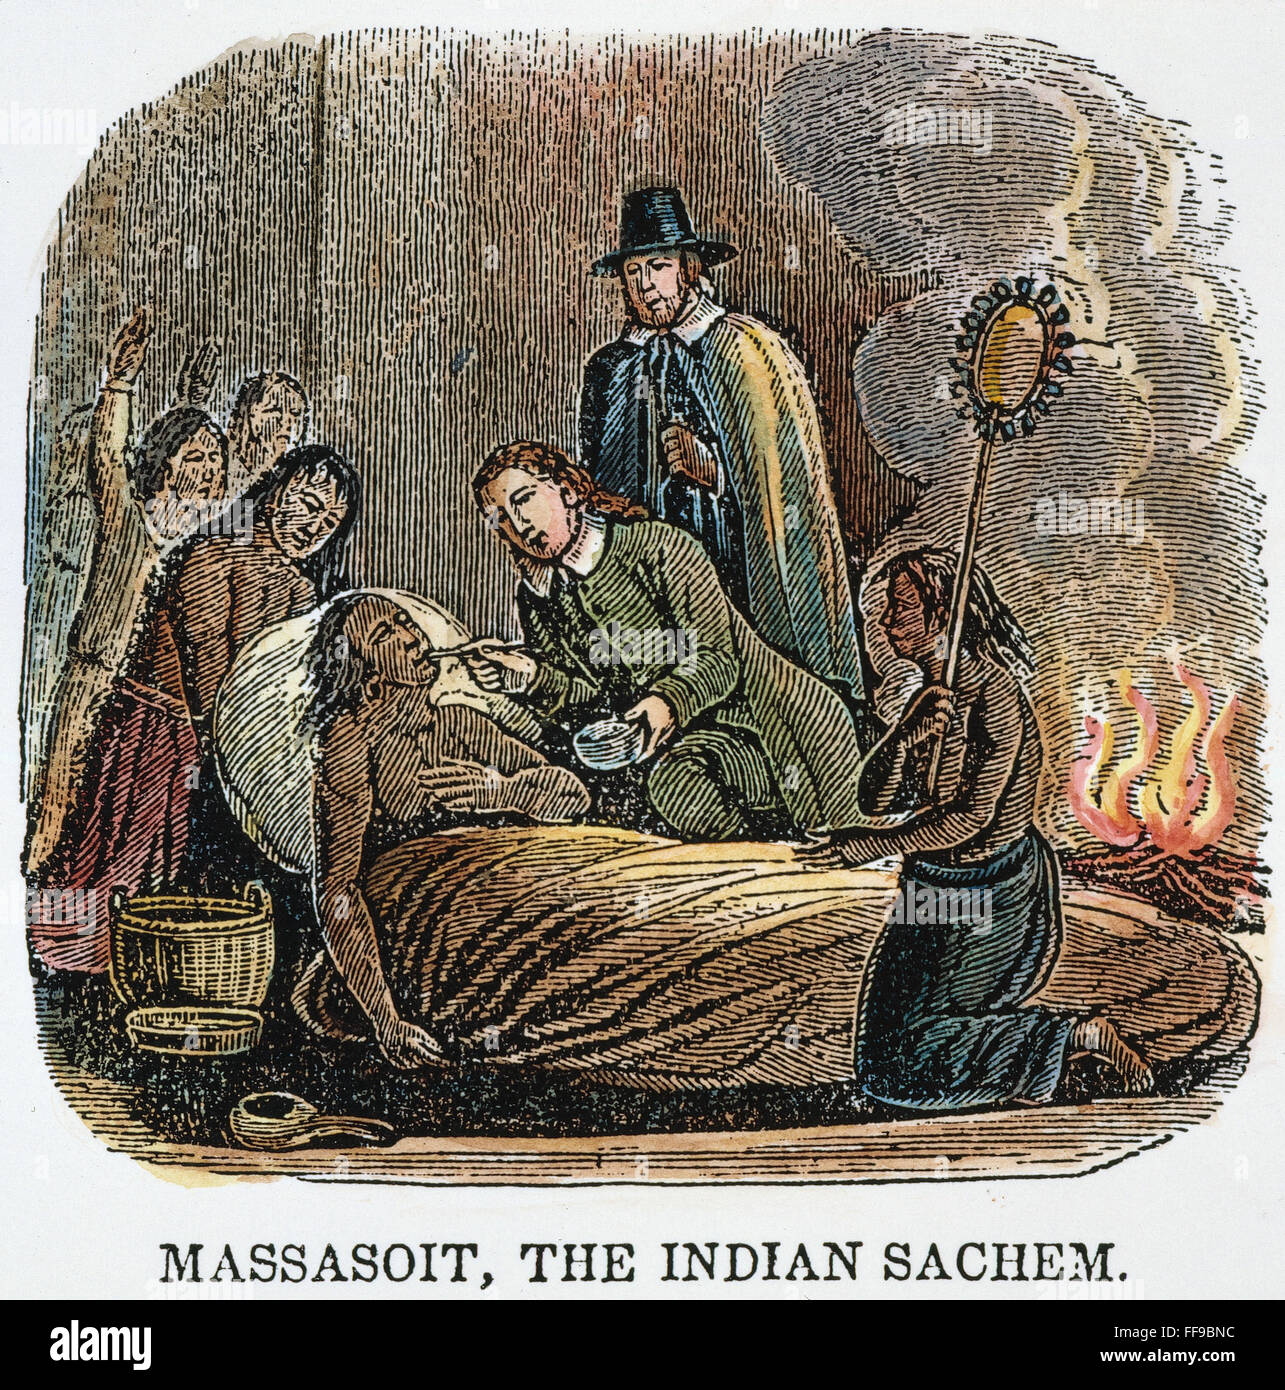 PLYMOUTH: MASSASOIT, 1623. /nEdward Winslow and John Hambden of Plymouth Colony nursing Massasoit on his sickbed, 1623. Wood engraving, 1853. Stock Photo